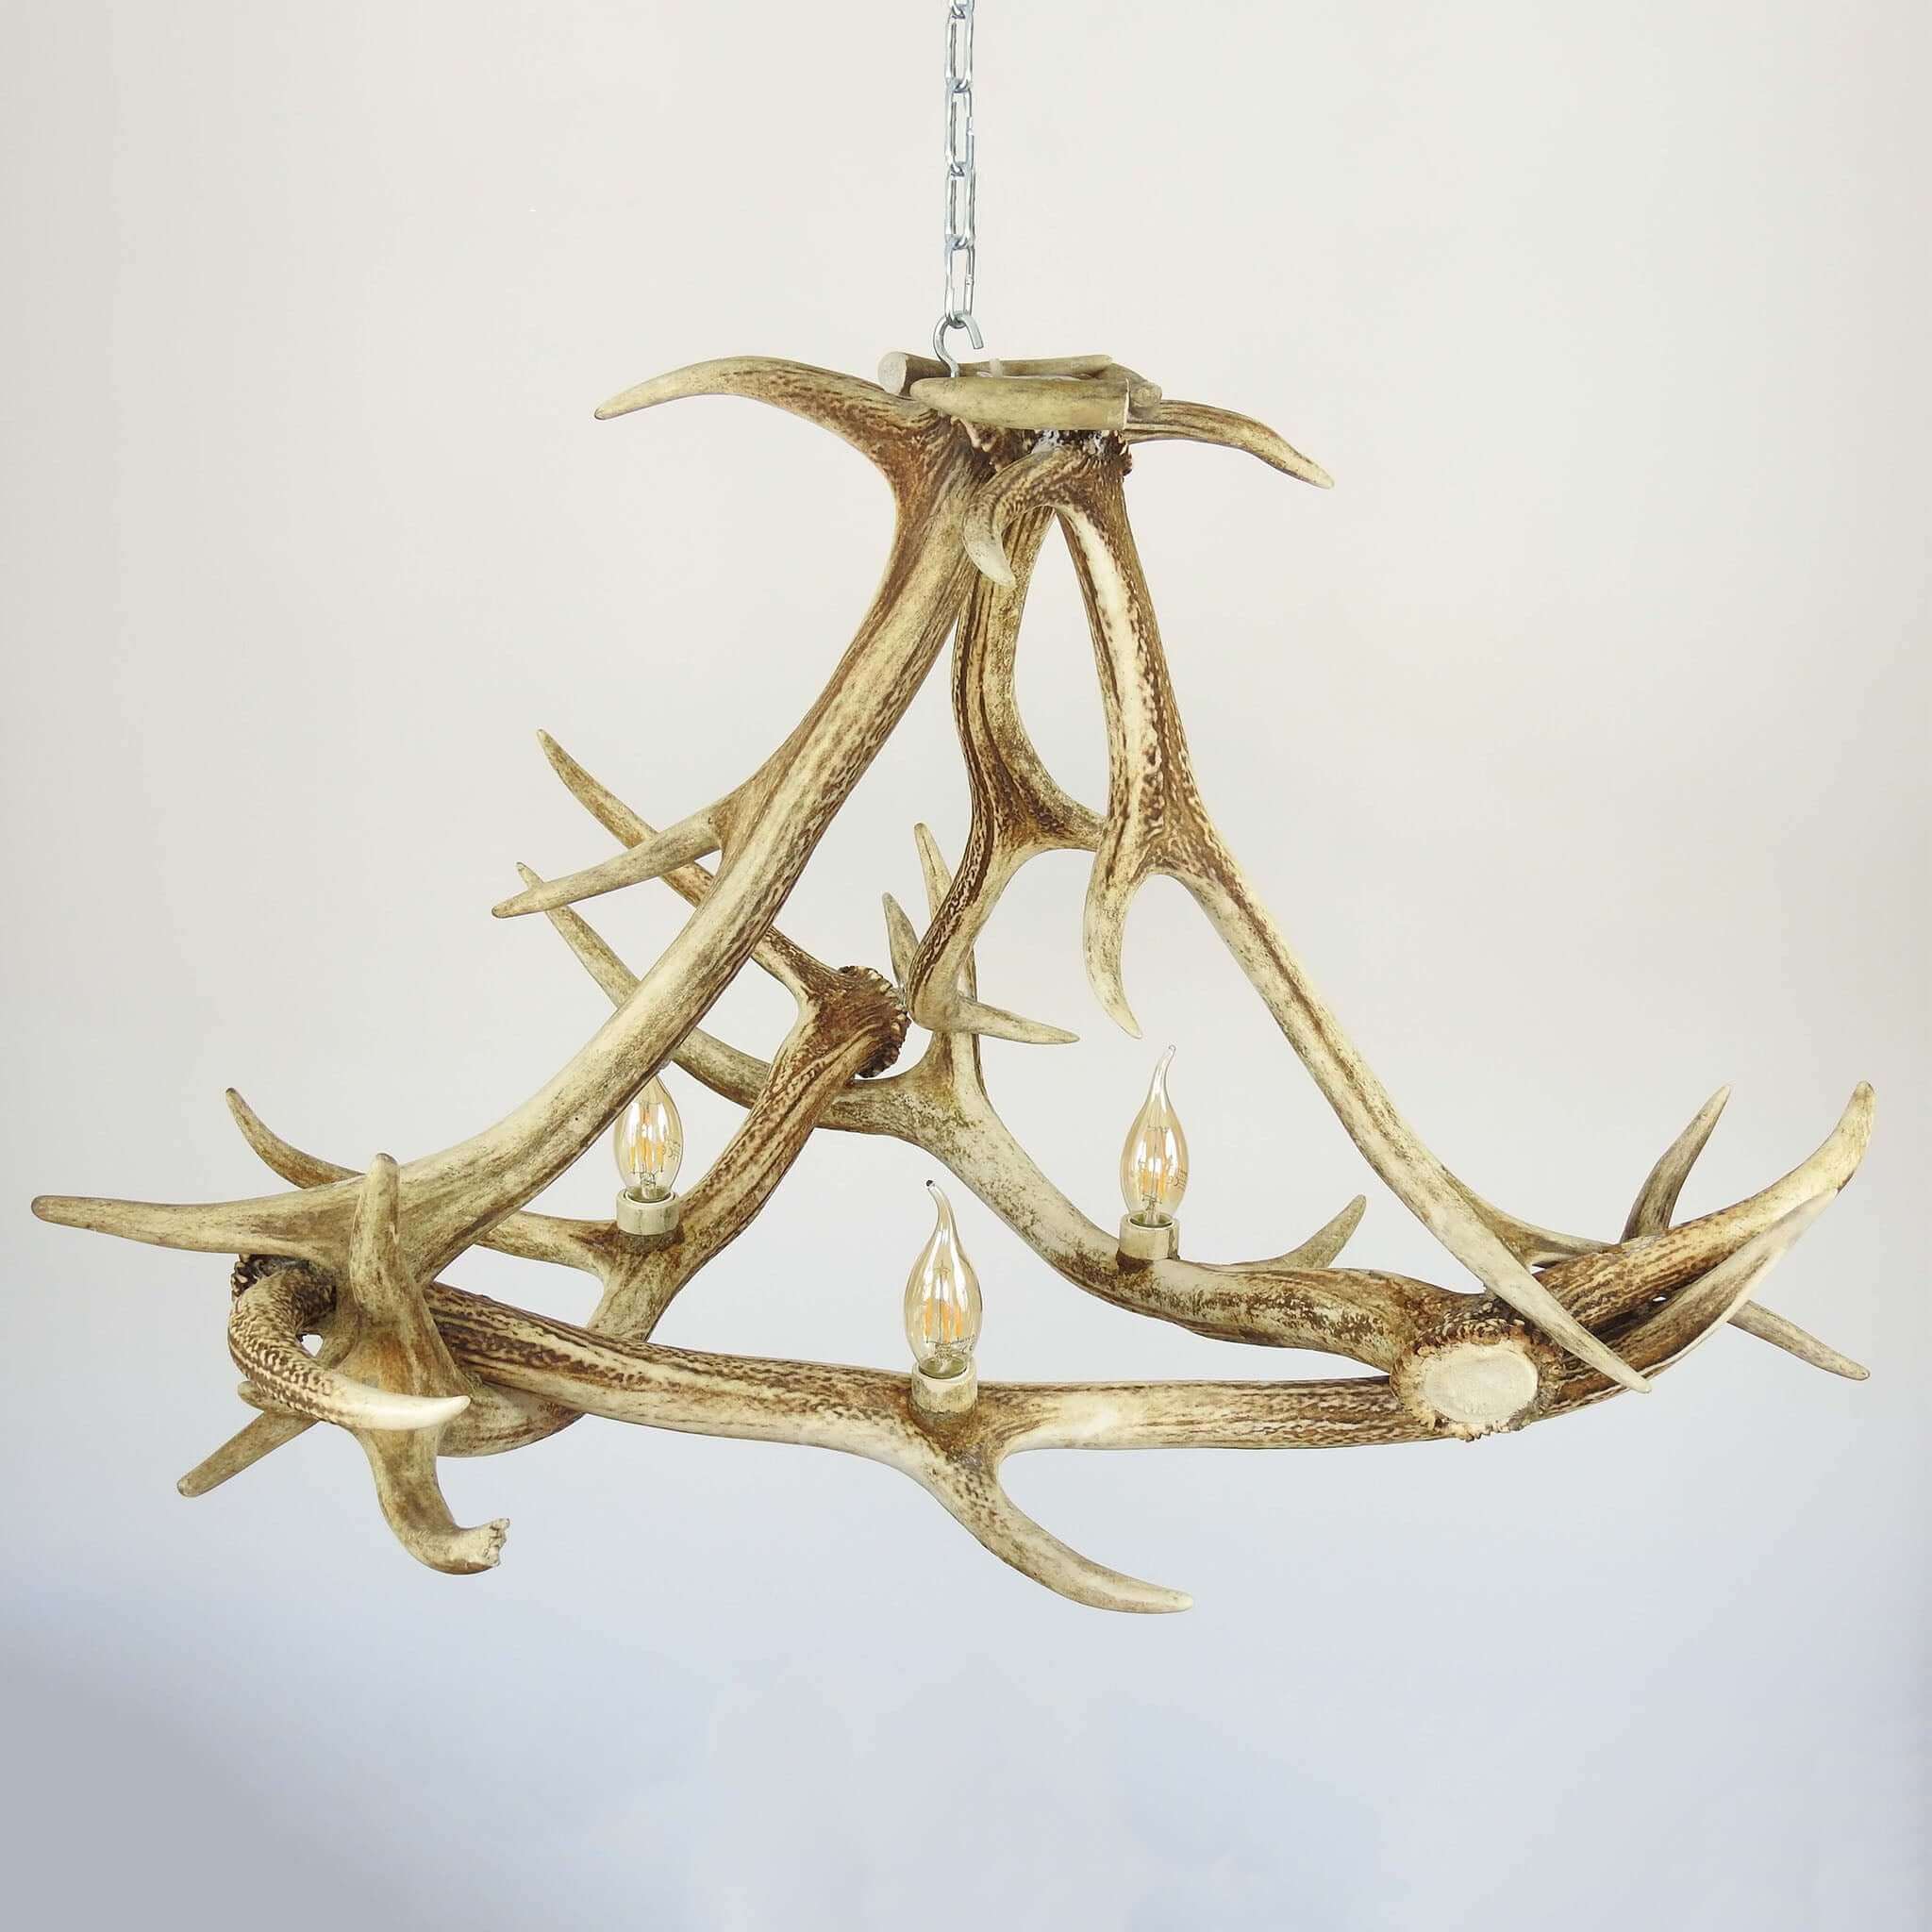 Antler chandelier in modern style.